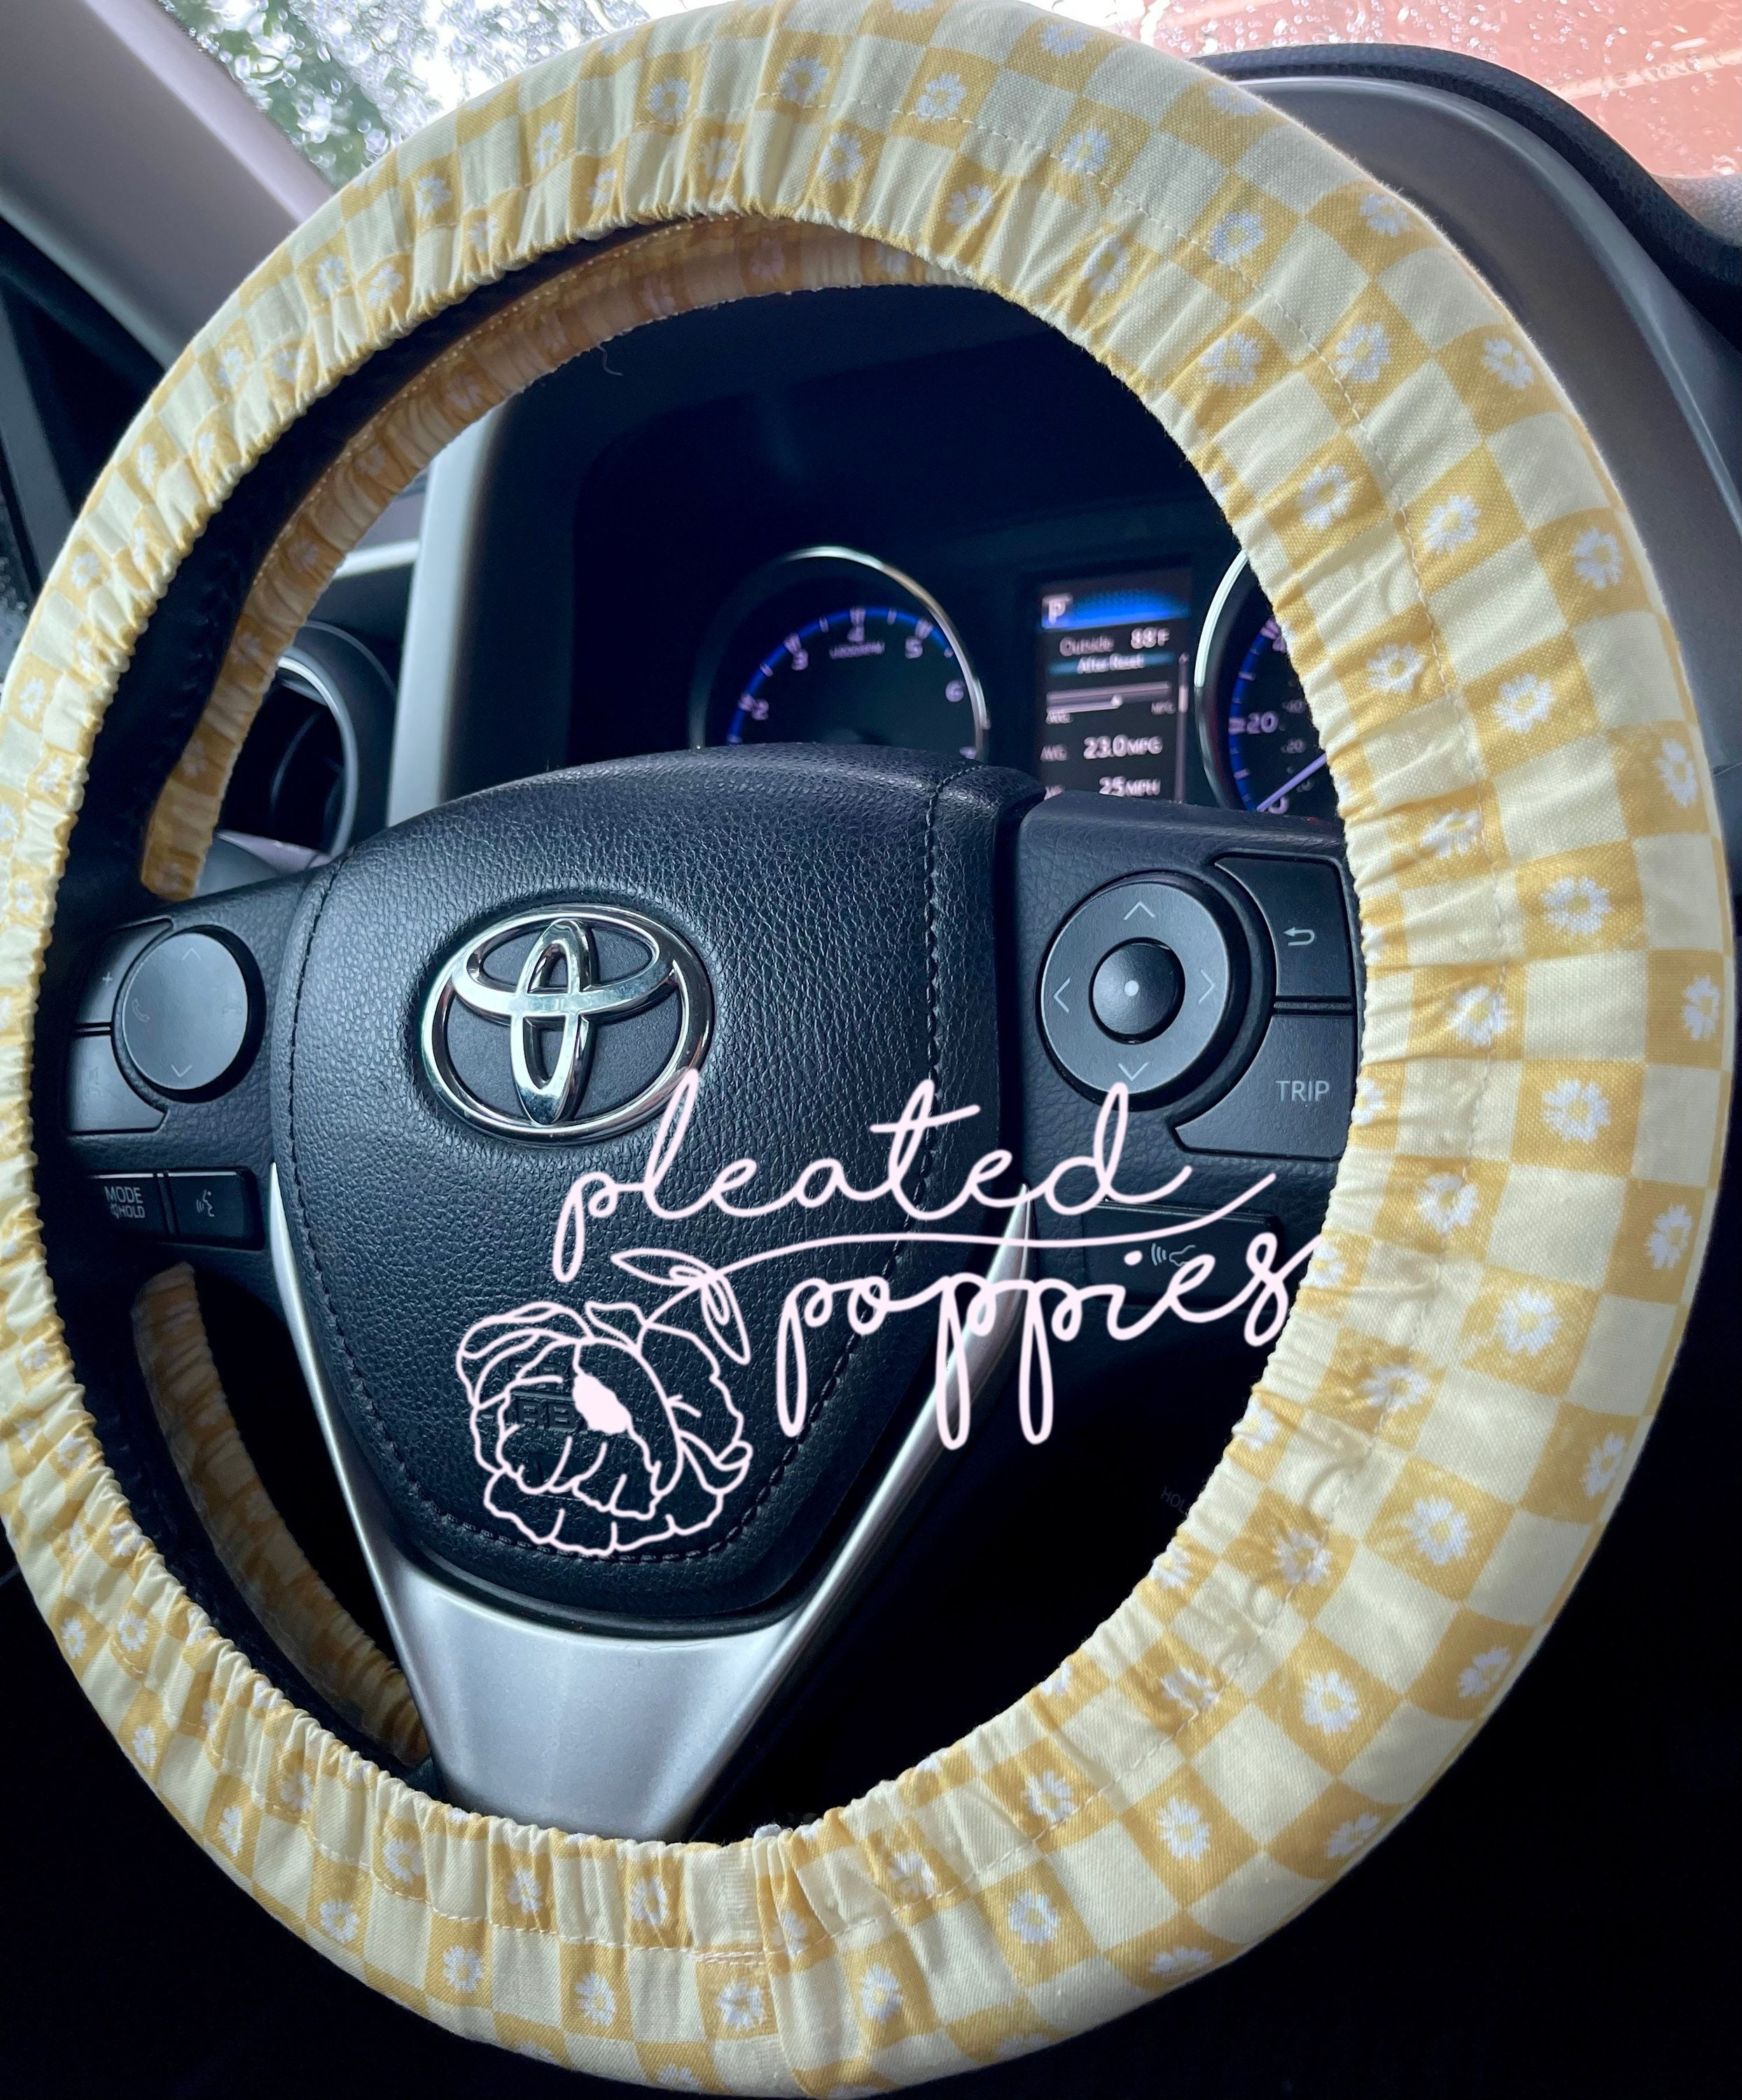 Louis Vuitton LV Symbol Steering Wheel Cover Fashion Car